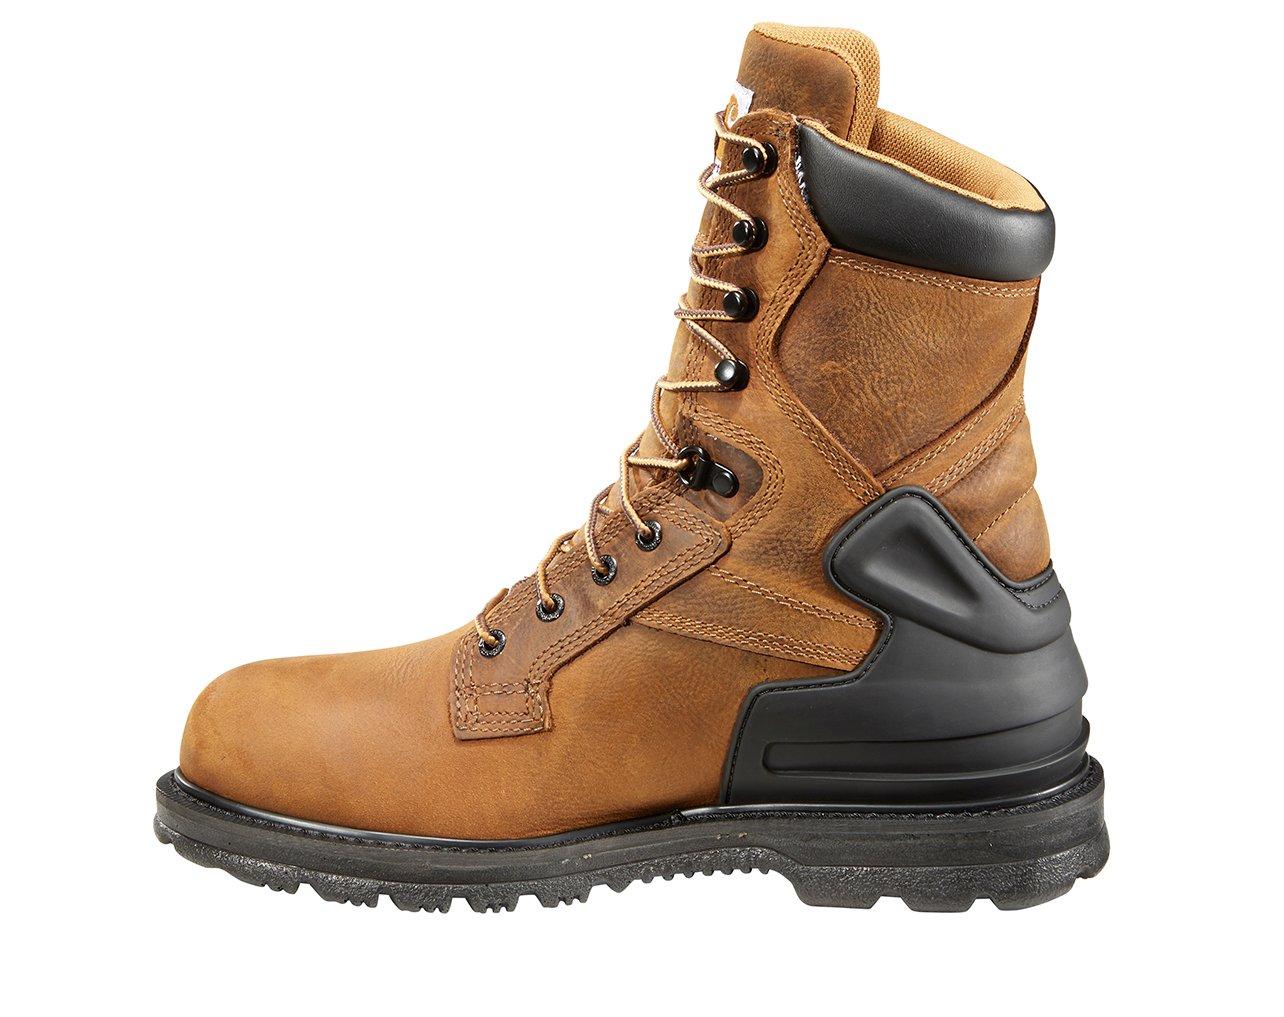 Men's Carhartt CMW8200 Steel Toe Waterproof Work Boots